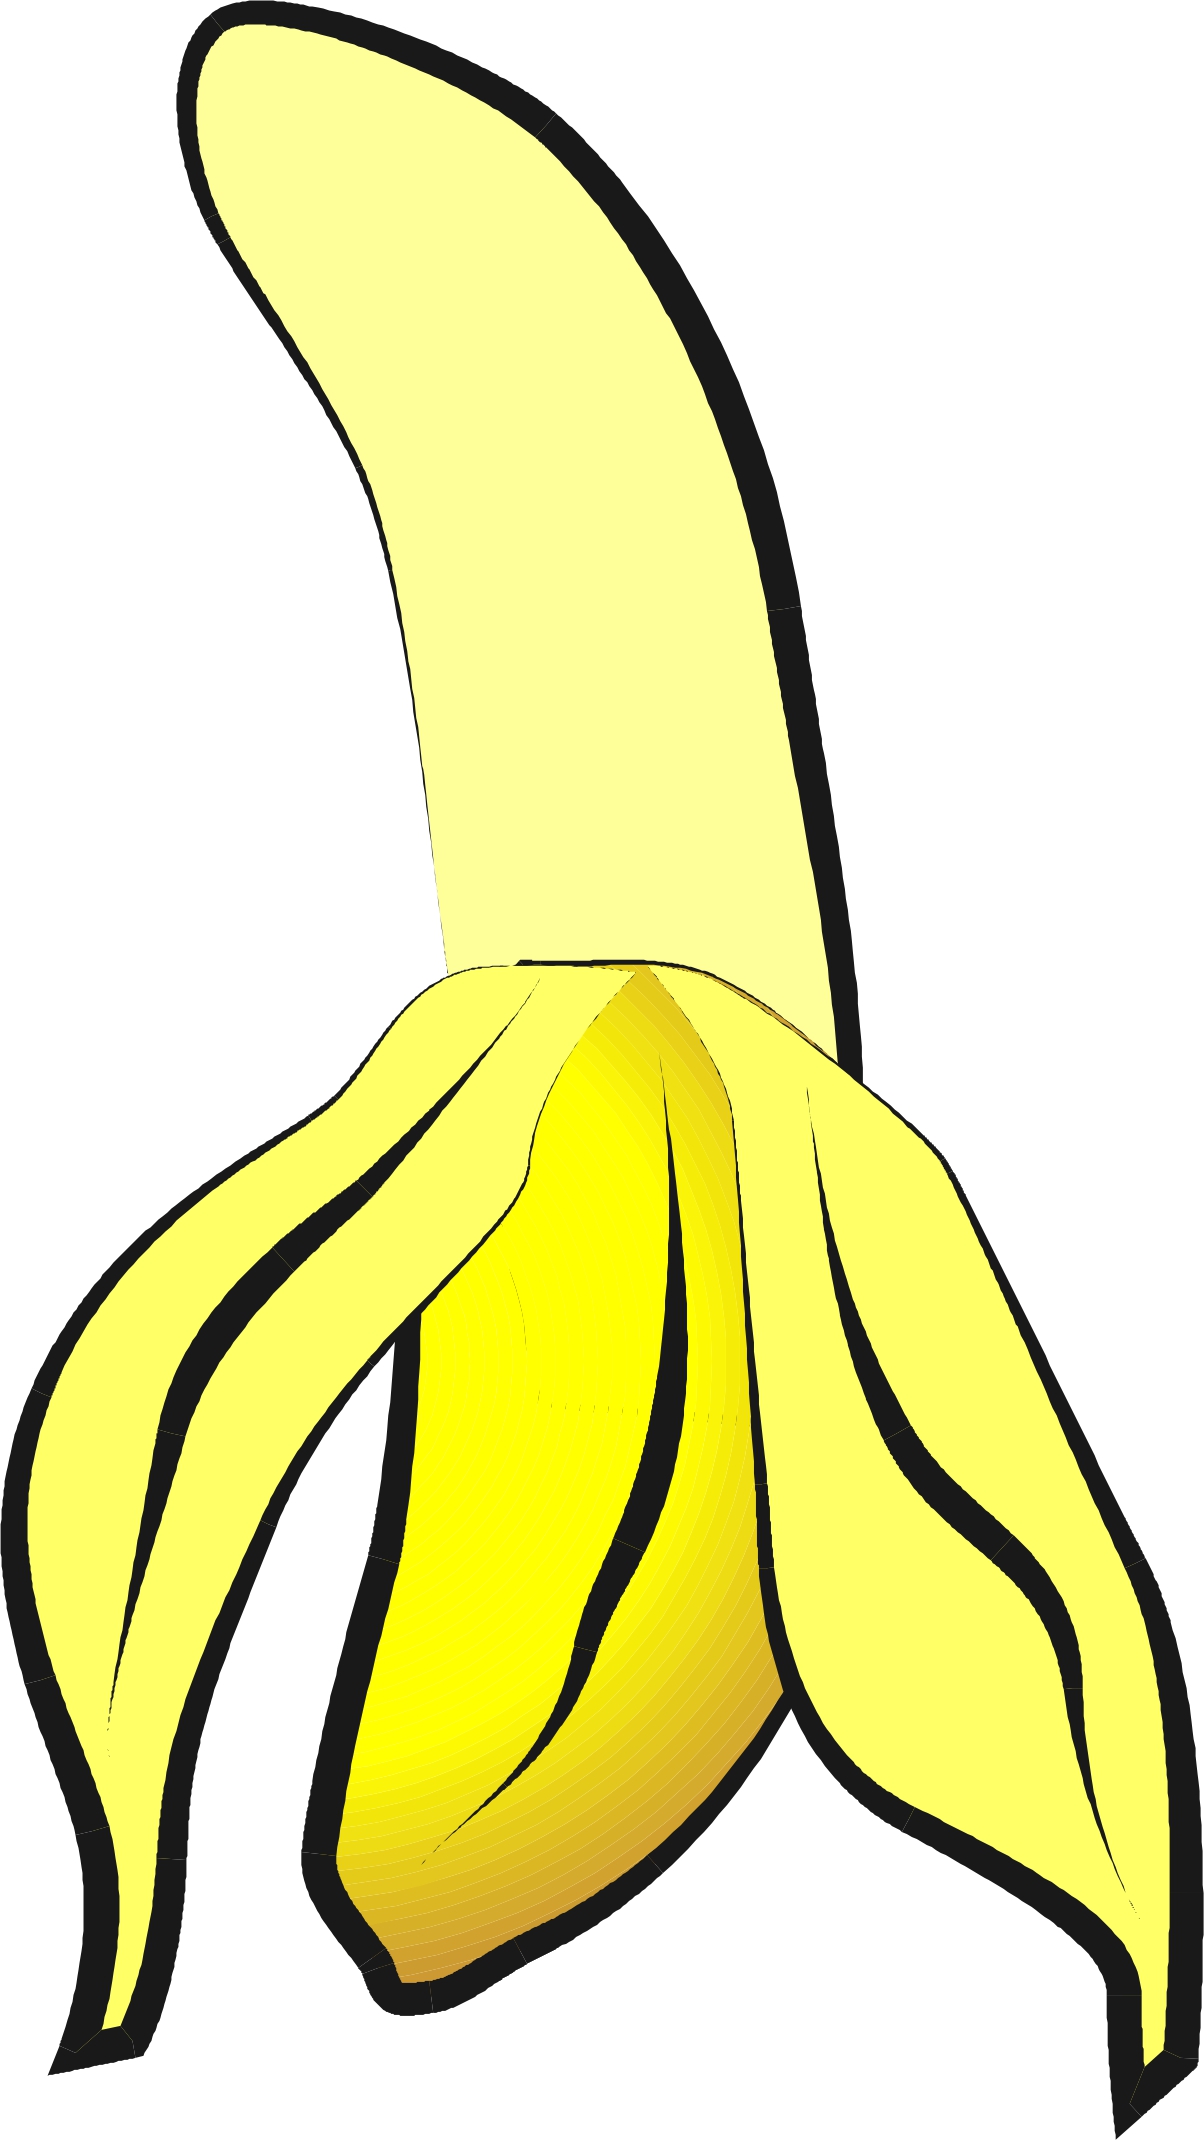 Cartoon Banana - ClipArt Best